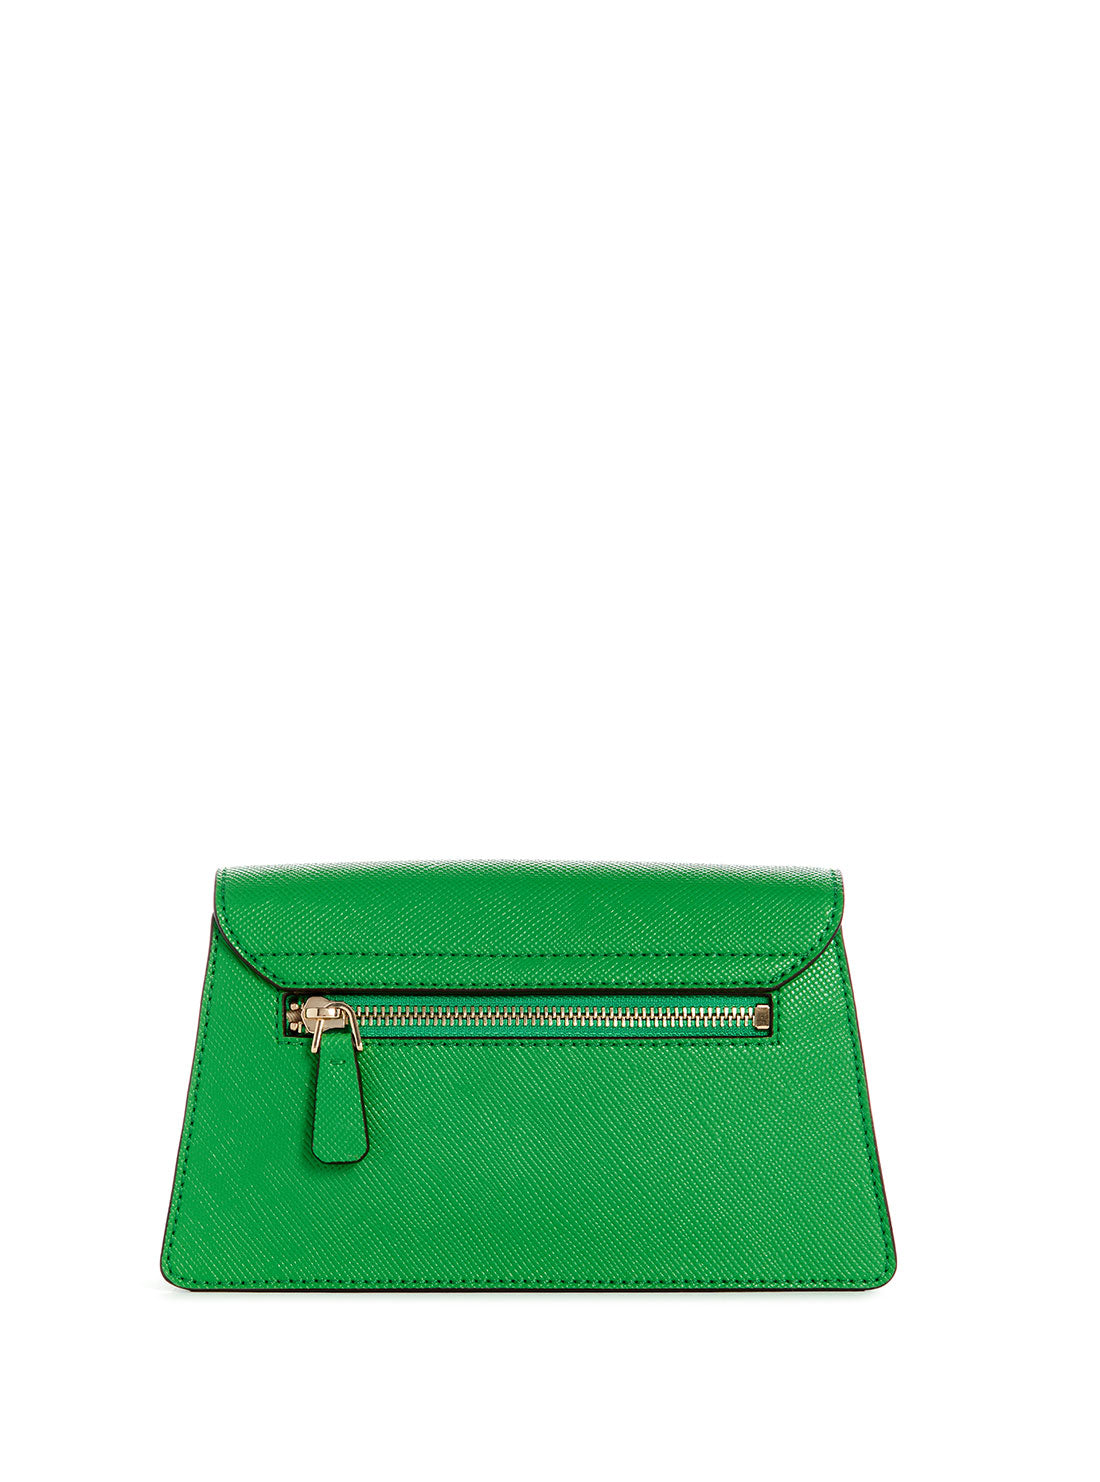 GUESS Green Avis Mini Shoulder Bag back view